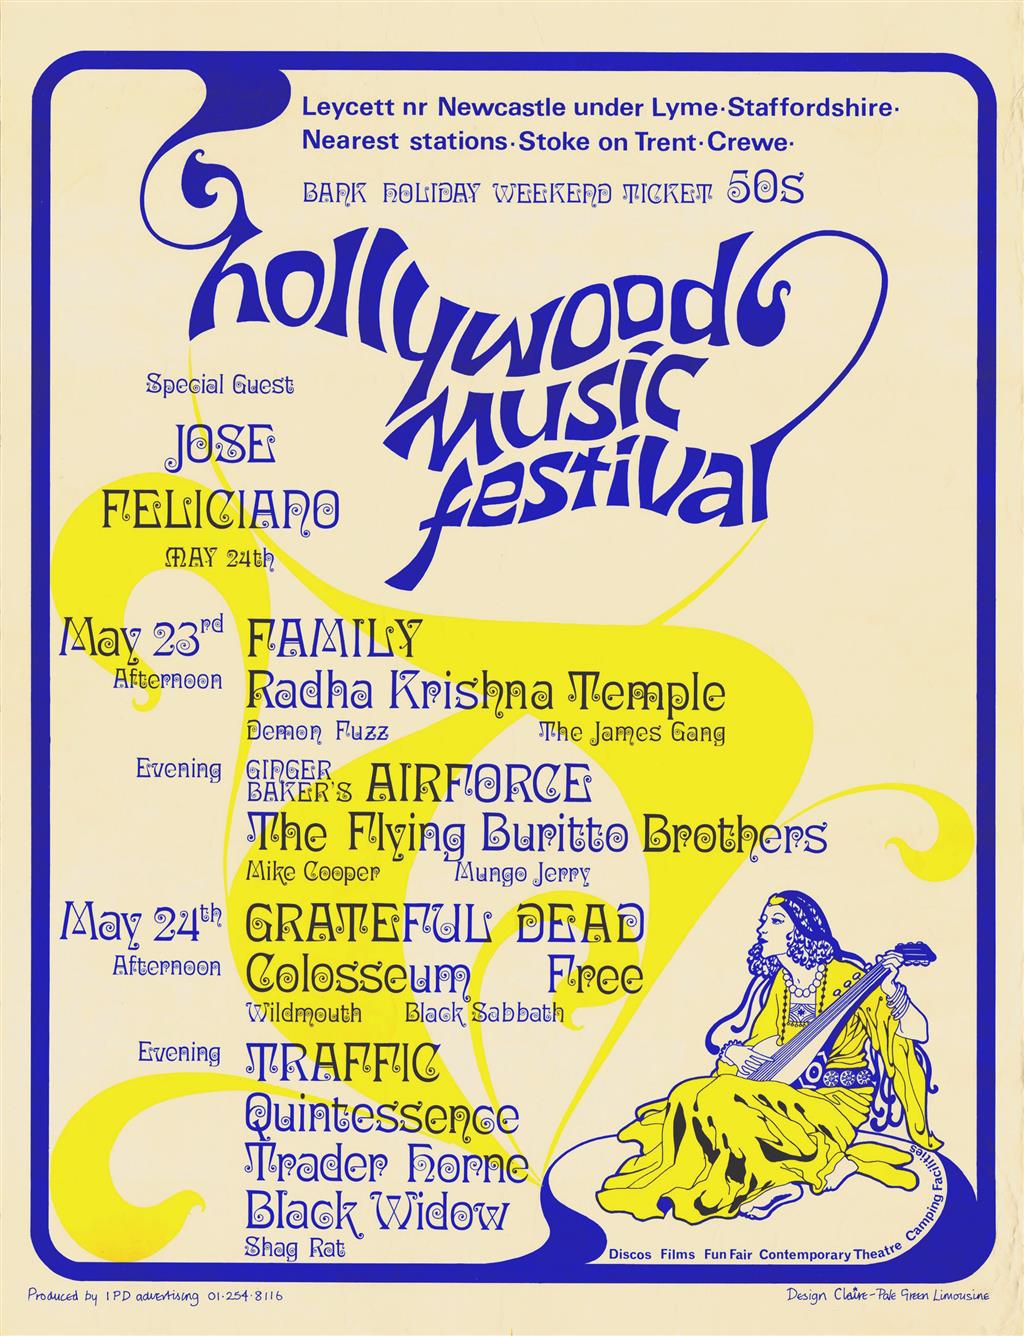 Hollywood Music Festival, Staffordshire, 1970